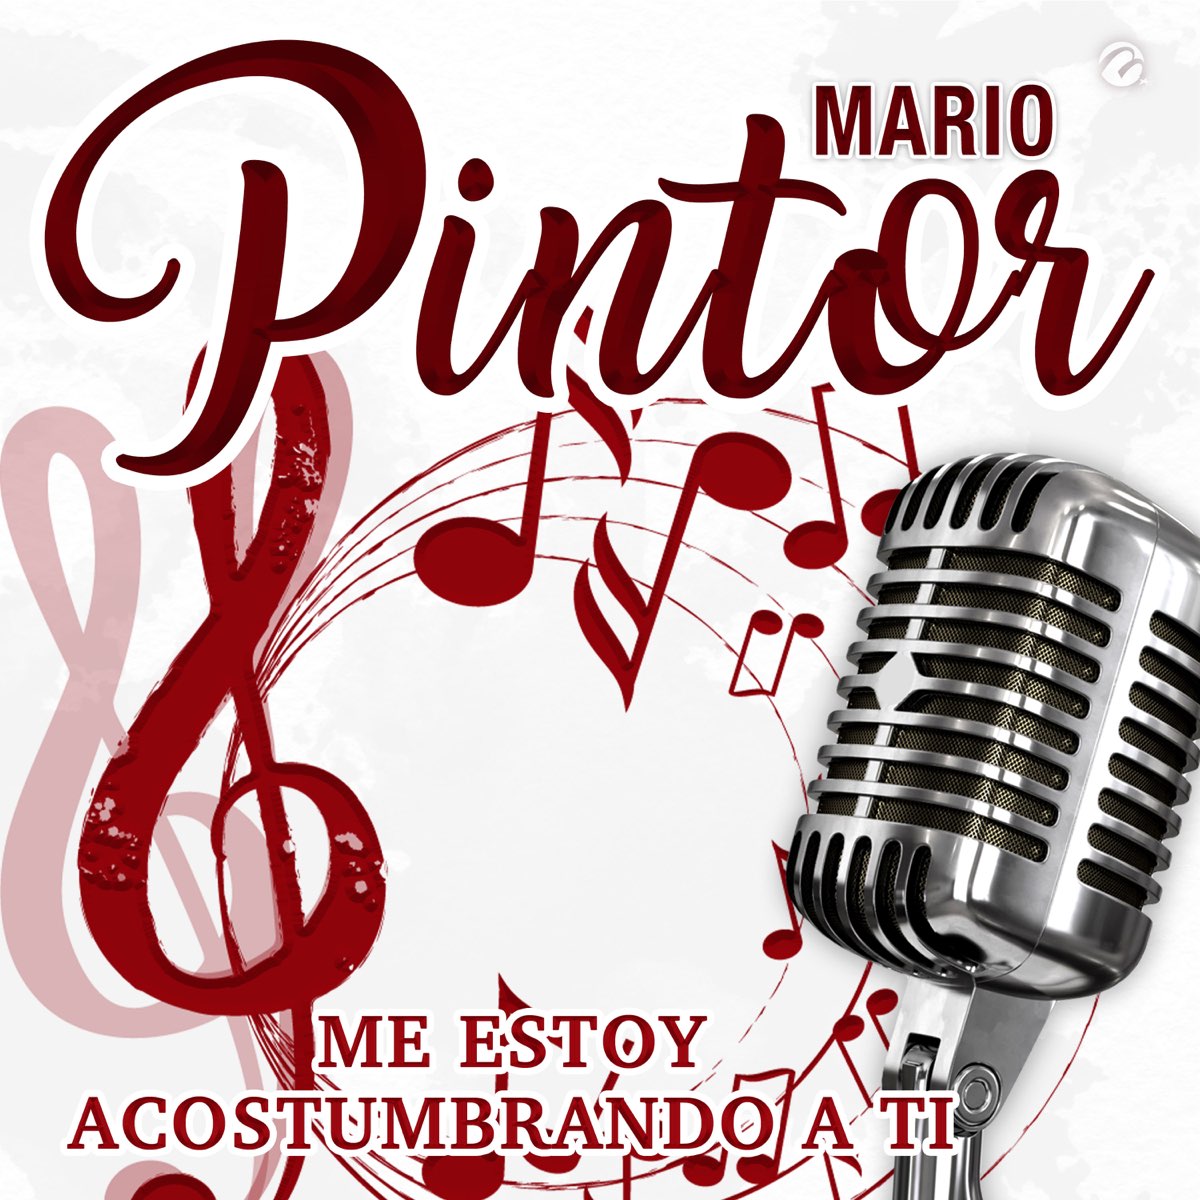 ‎Me Estoy Acostumbrando a Ti - Single - Album by Mario Pintor - Apple Music